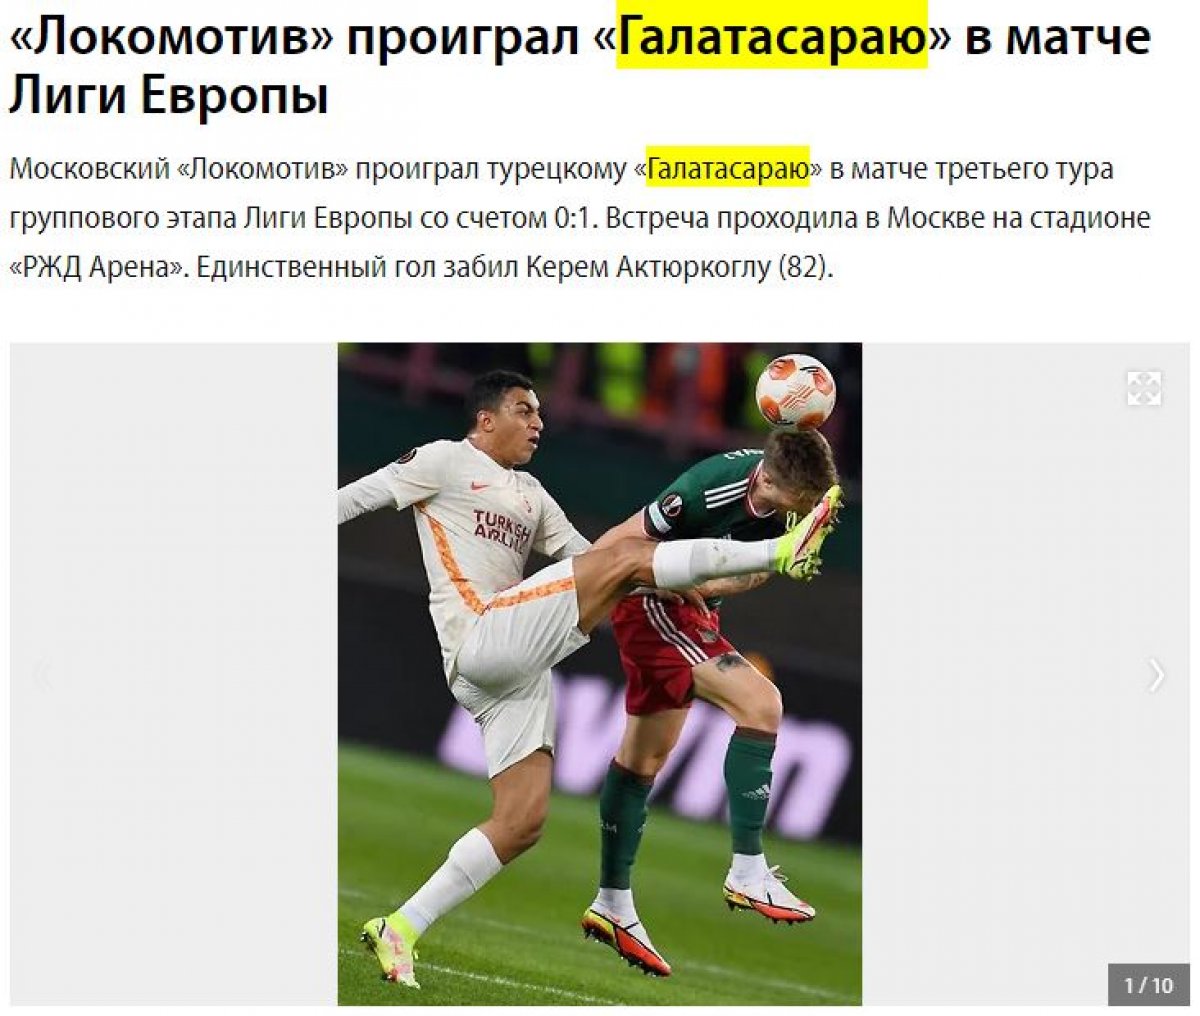 Rus basınından Fatih Terim ve Galatasaray a övgü #4